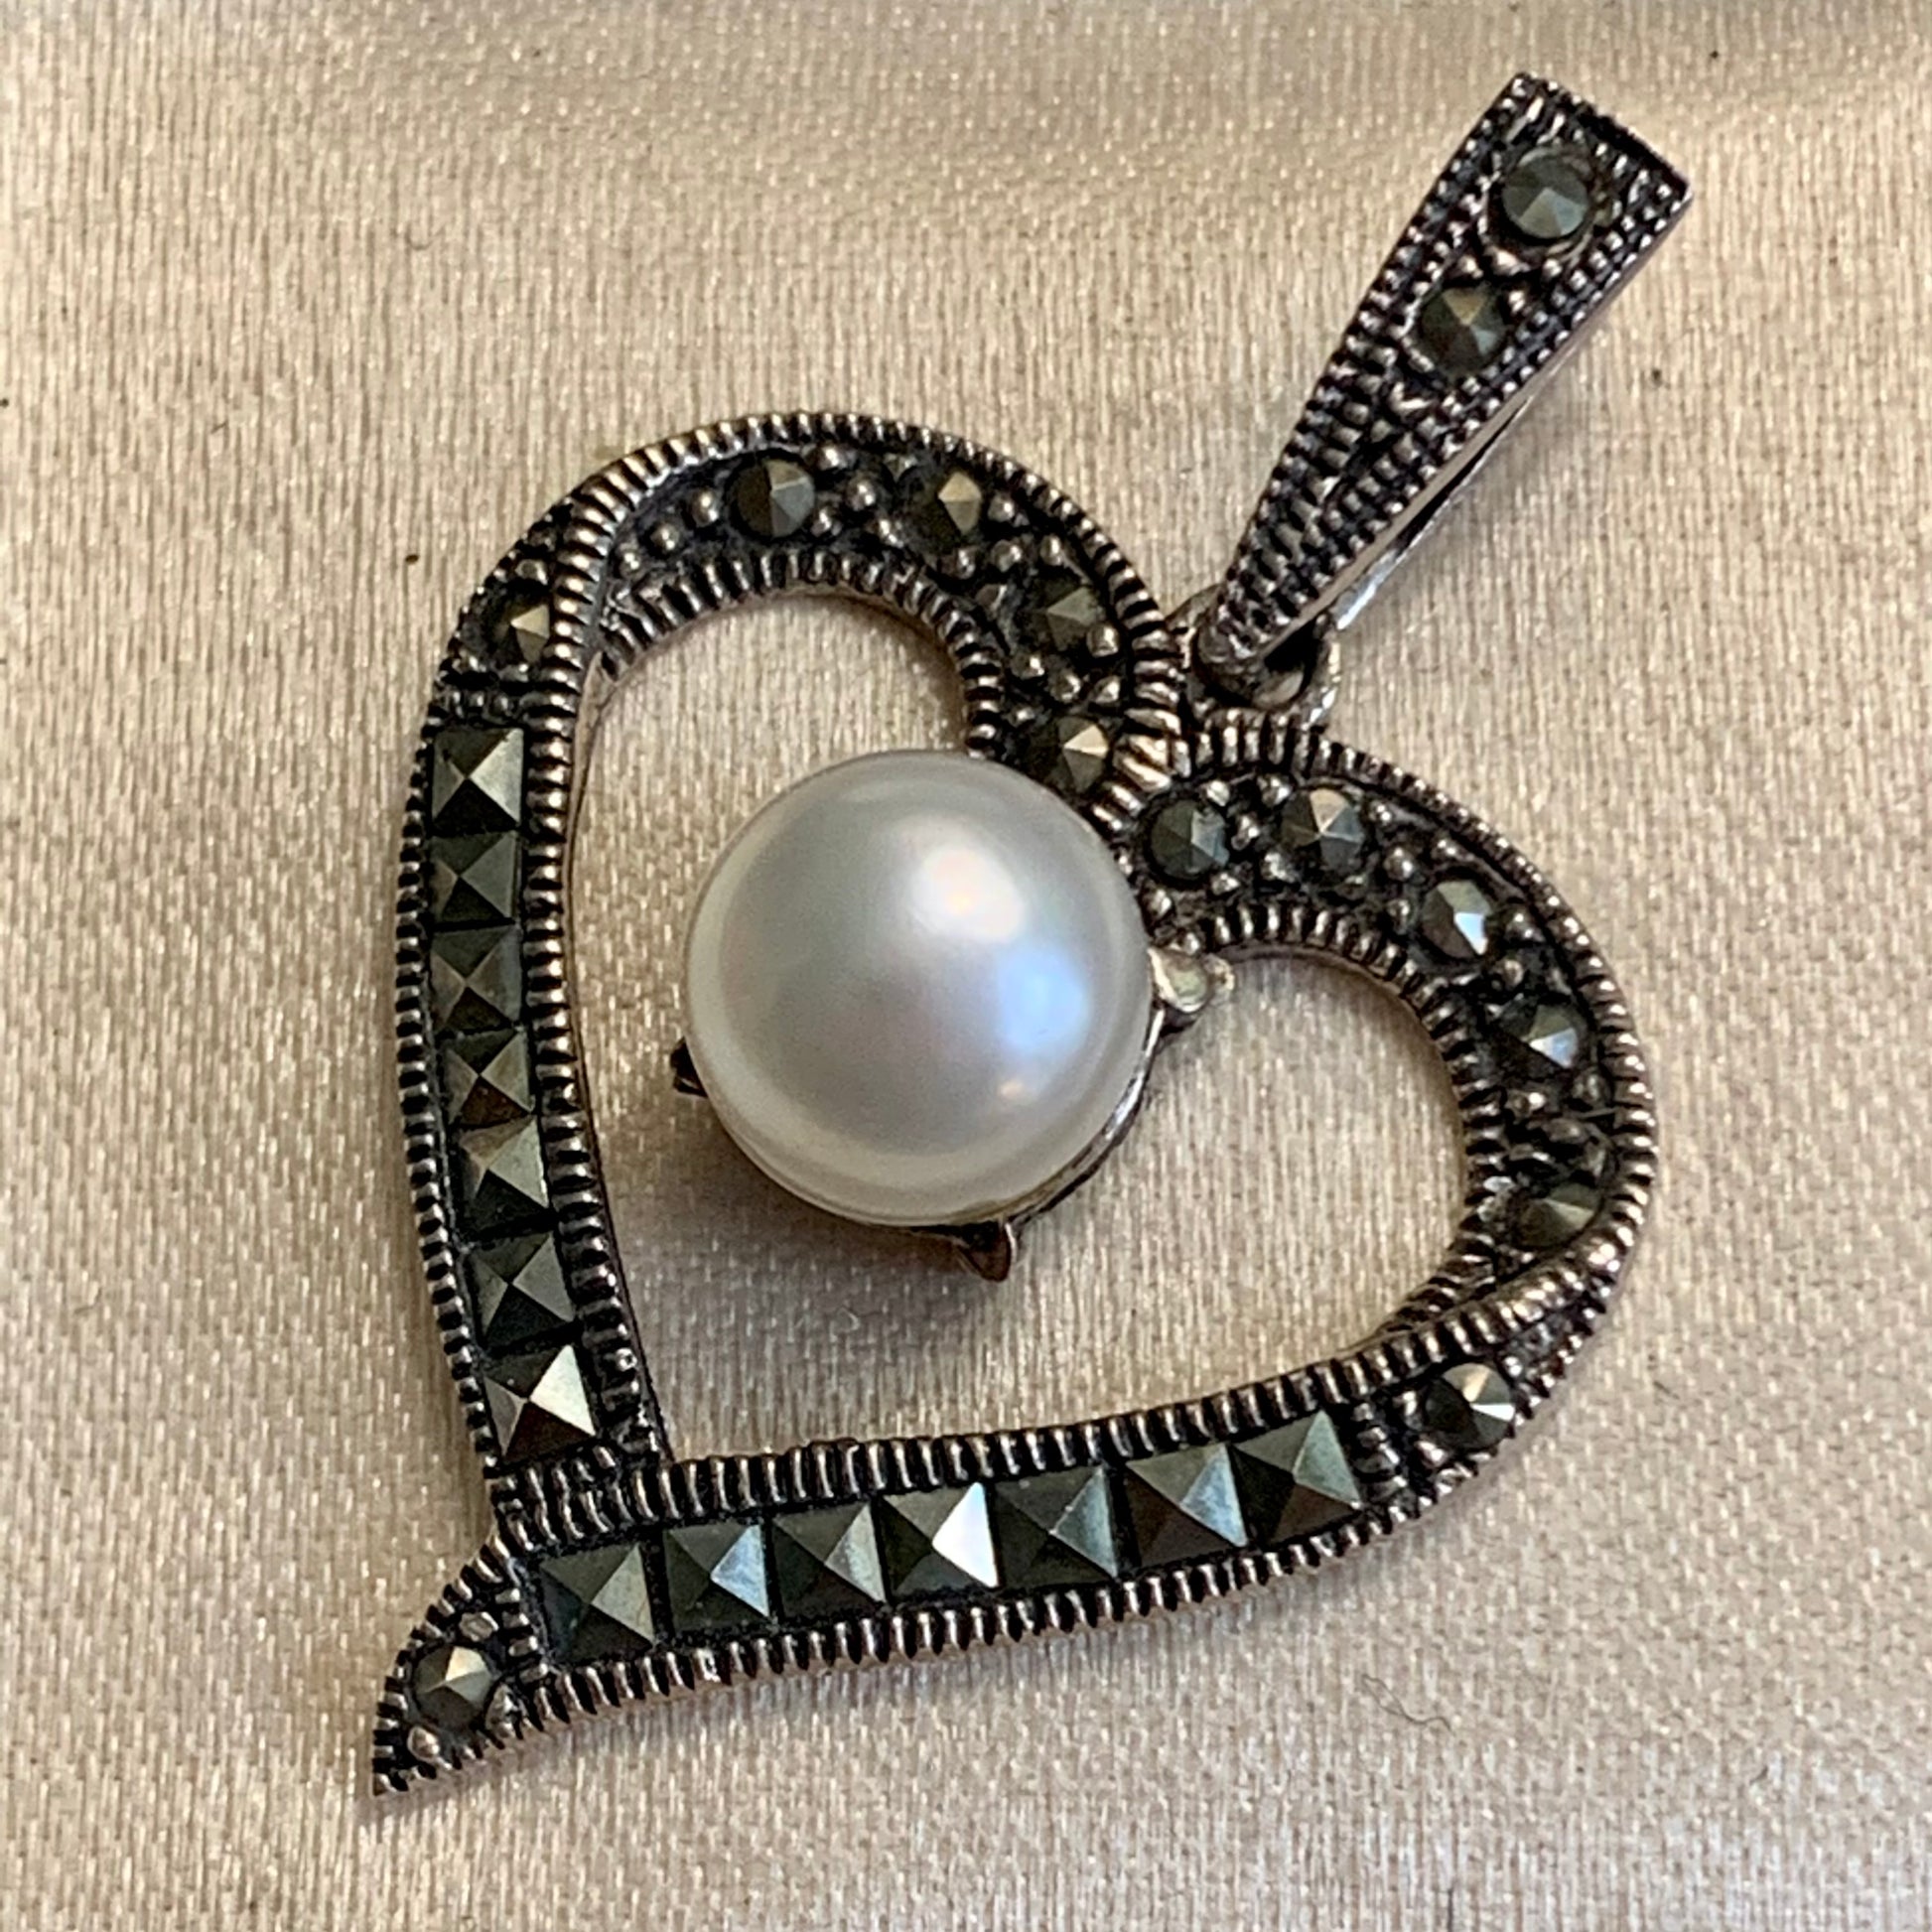 Vintage Sterling Silver Marcasite Heart Pendant